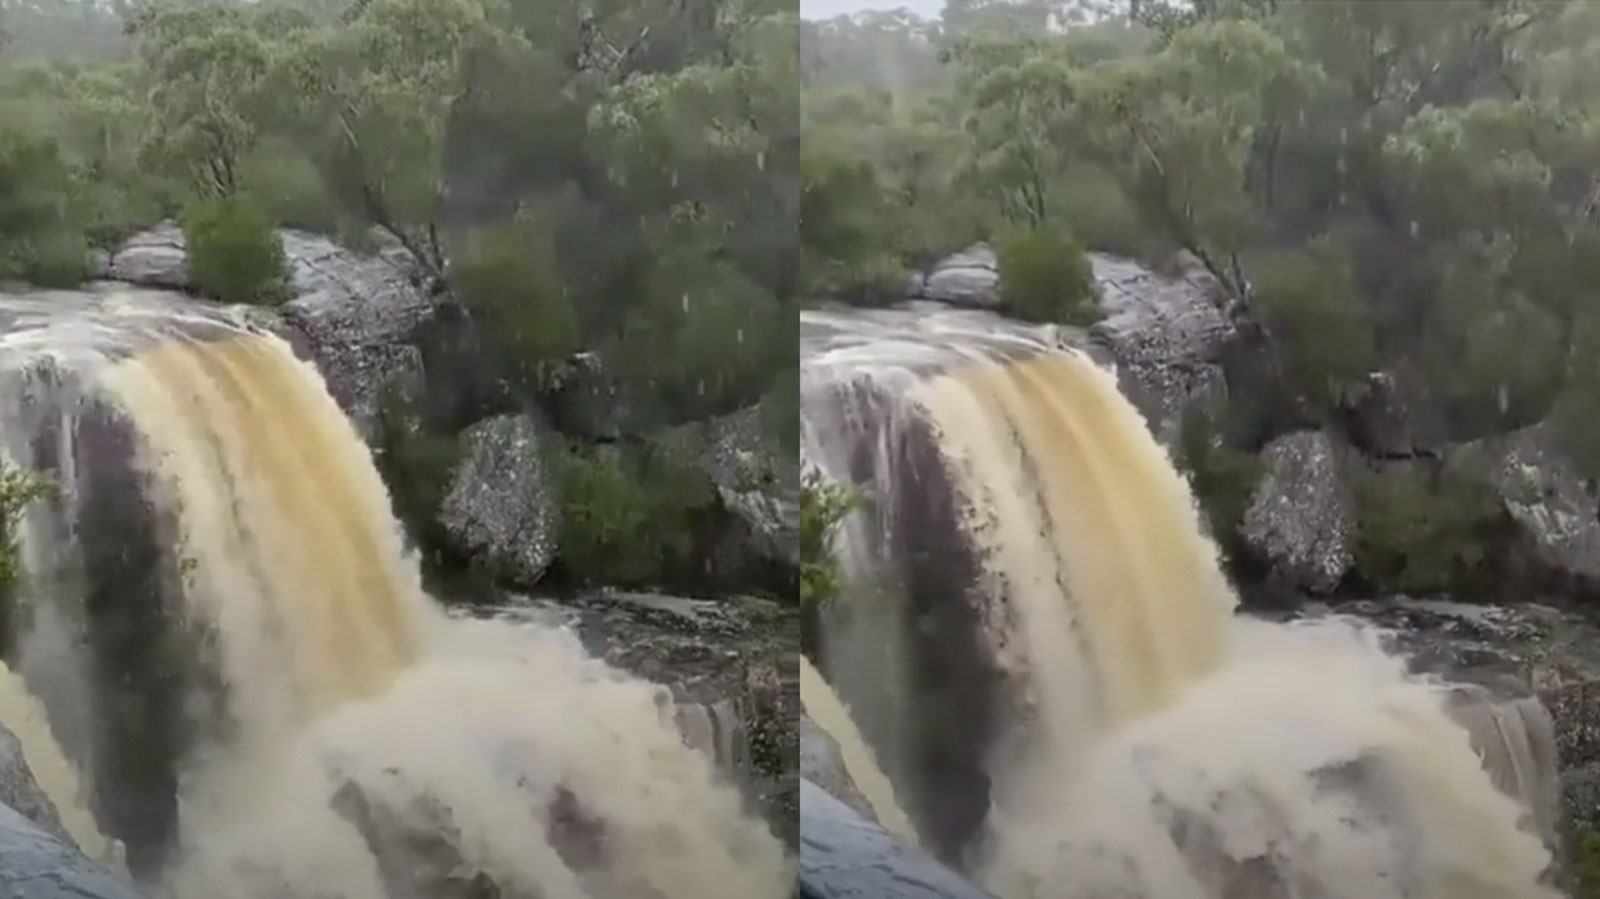 Rare Sight At ‘Secret’ Sydney Waterfall